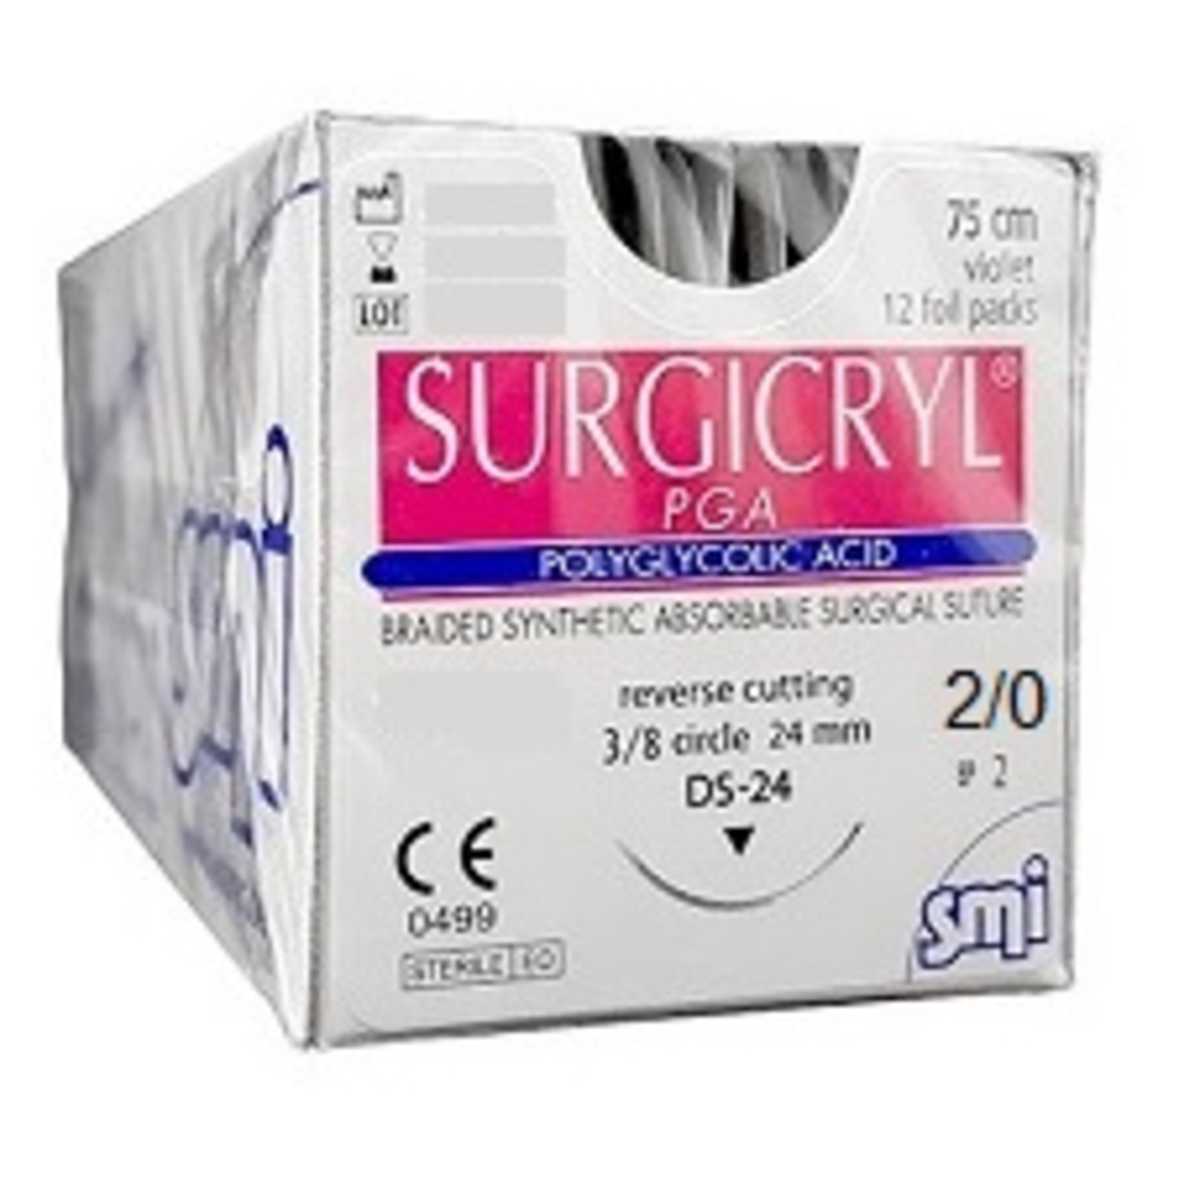 2/0 Surgicryl Pga (Polyglycolic Acid)